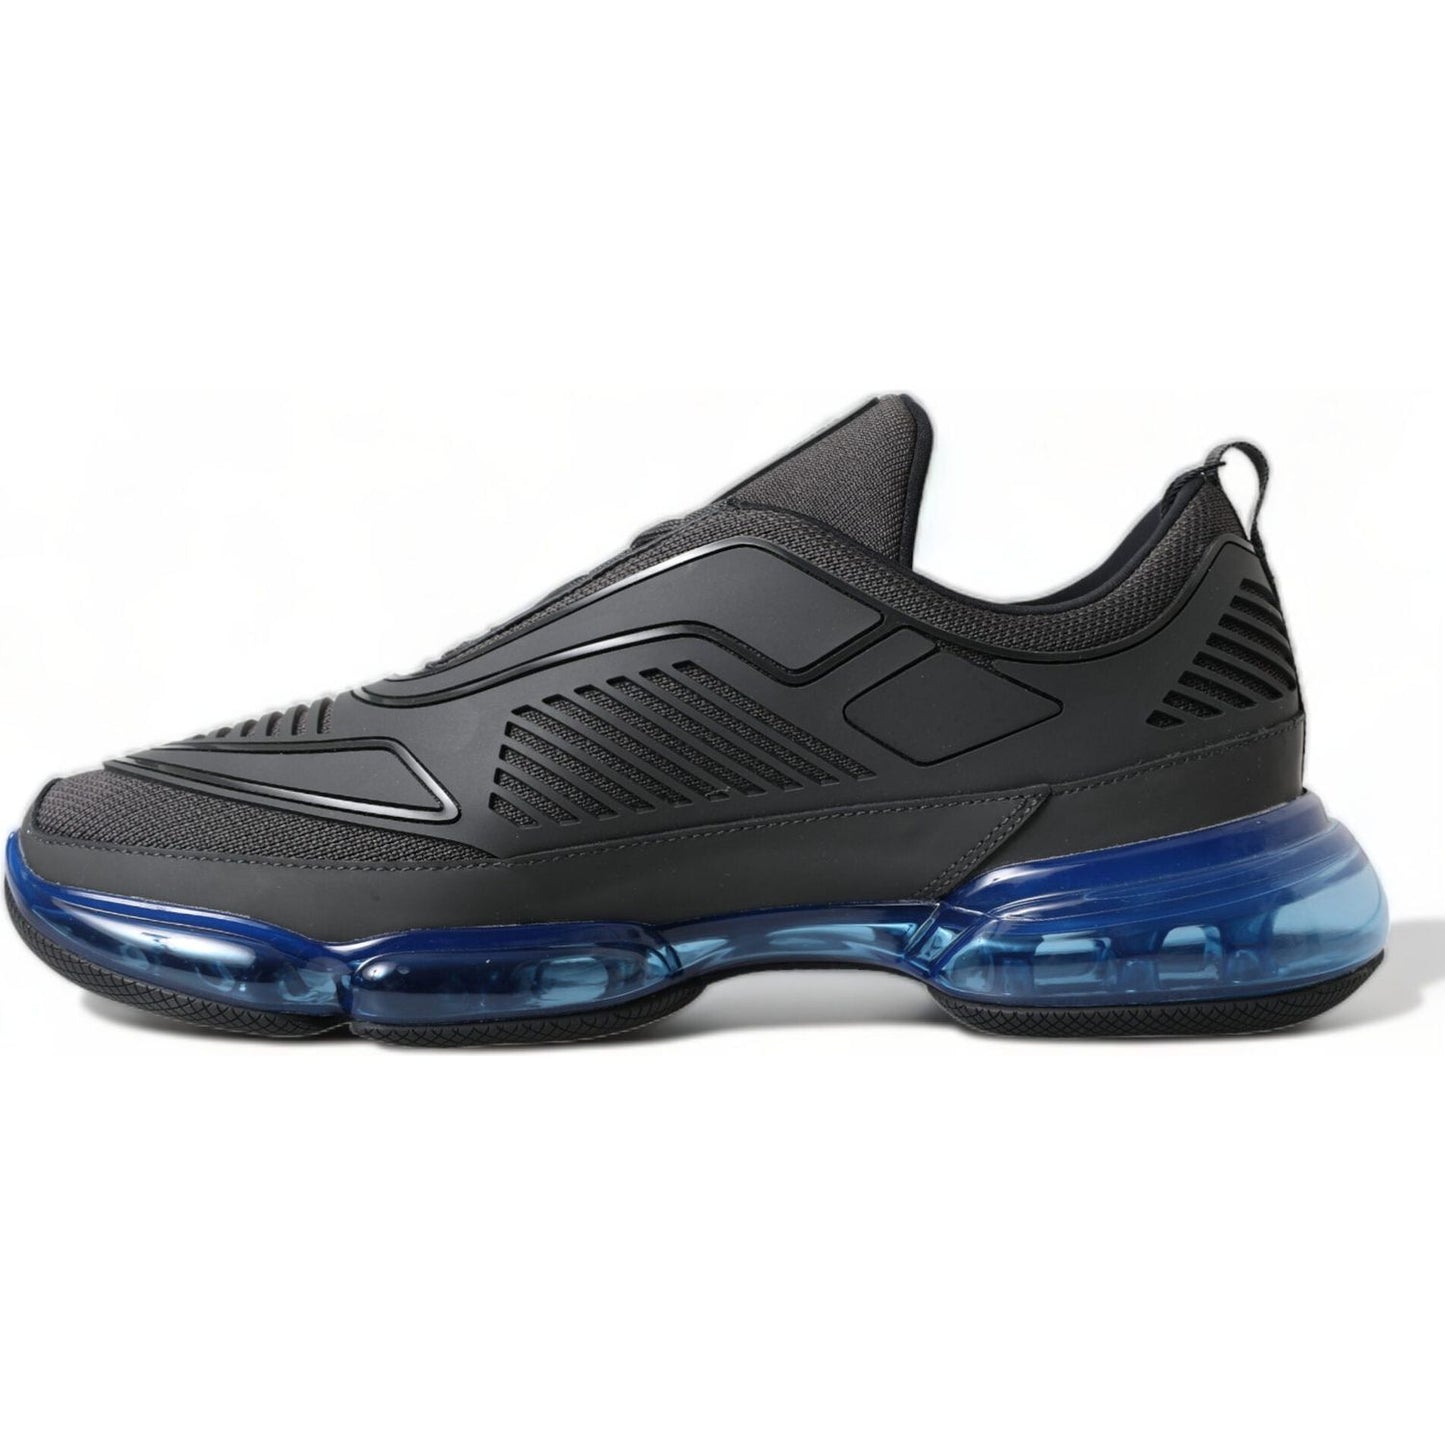 Prada Elegant Men's Black Mesh Sneakers black-blue-rubber-knit-slip-on-low-top-sneakers-shoes